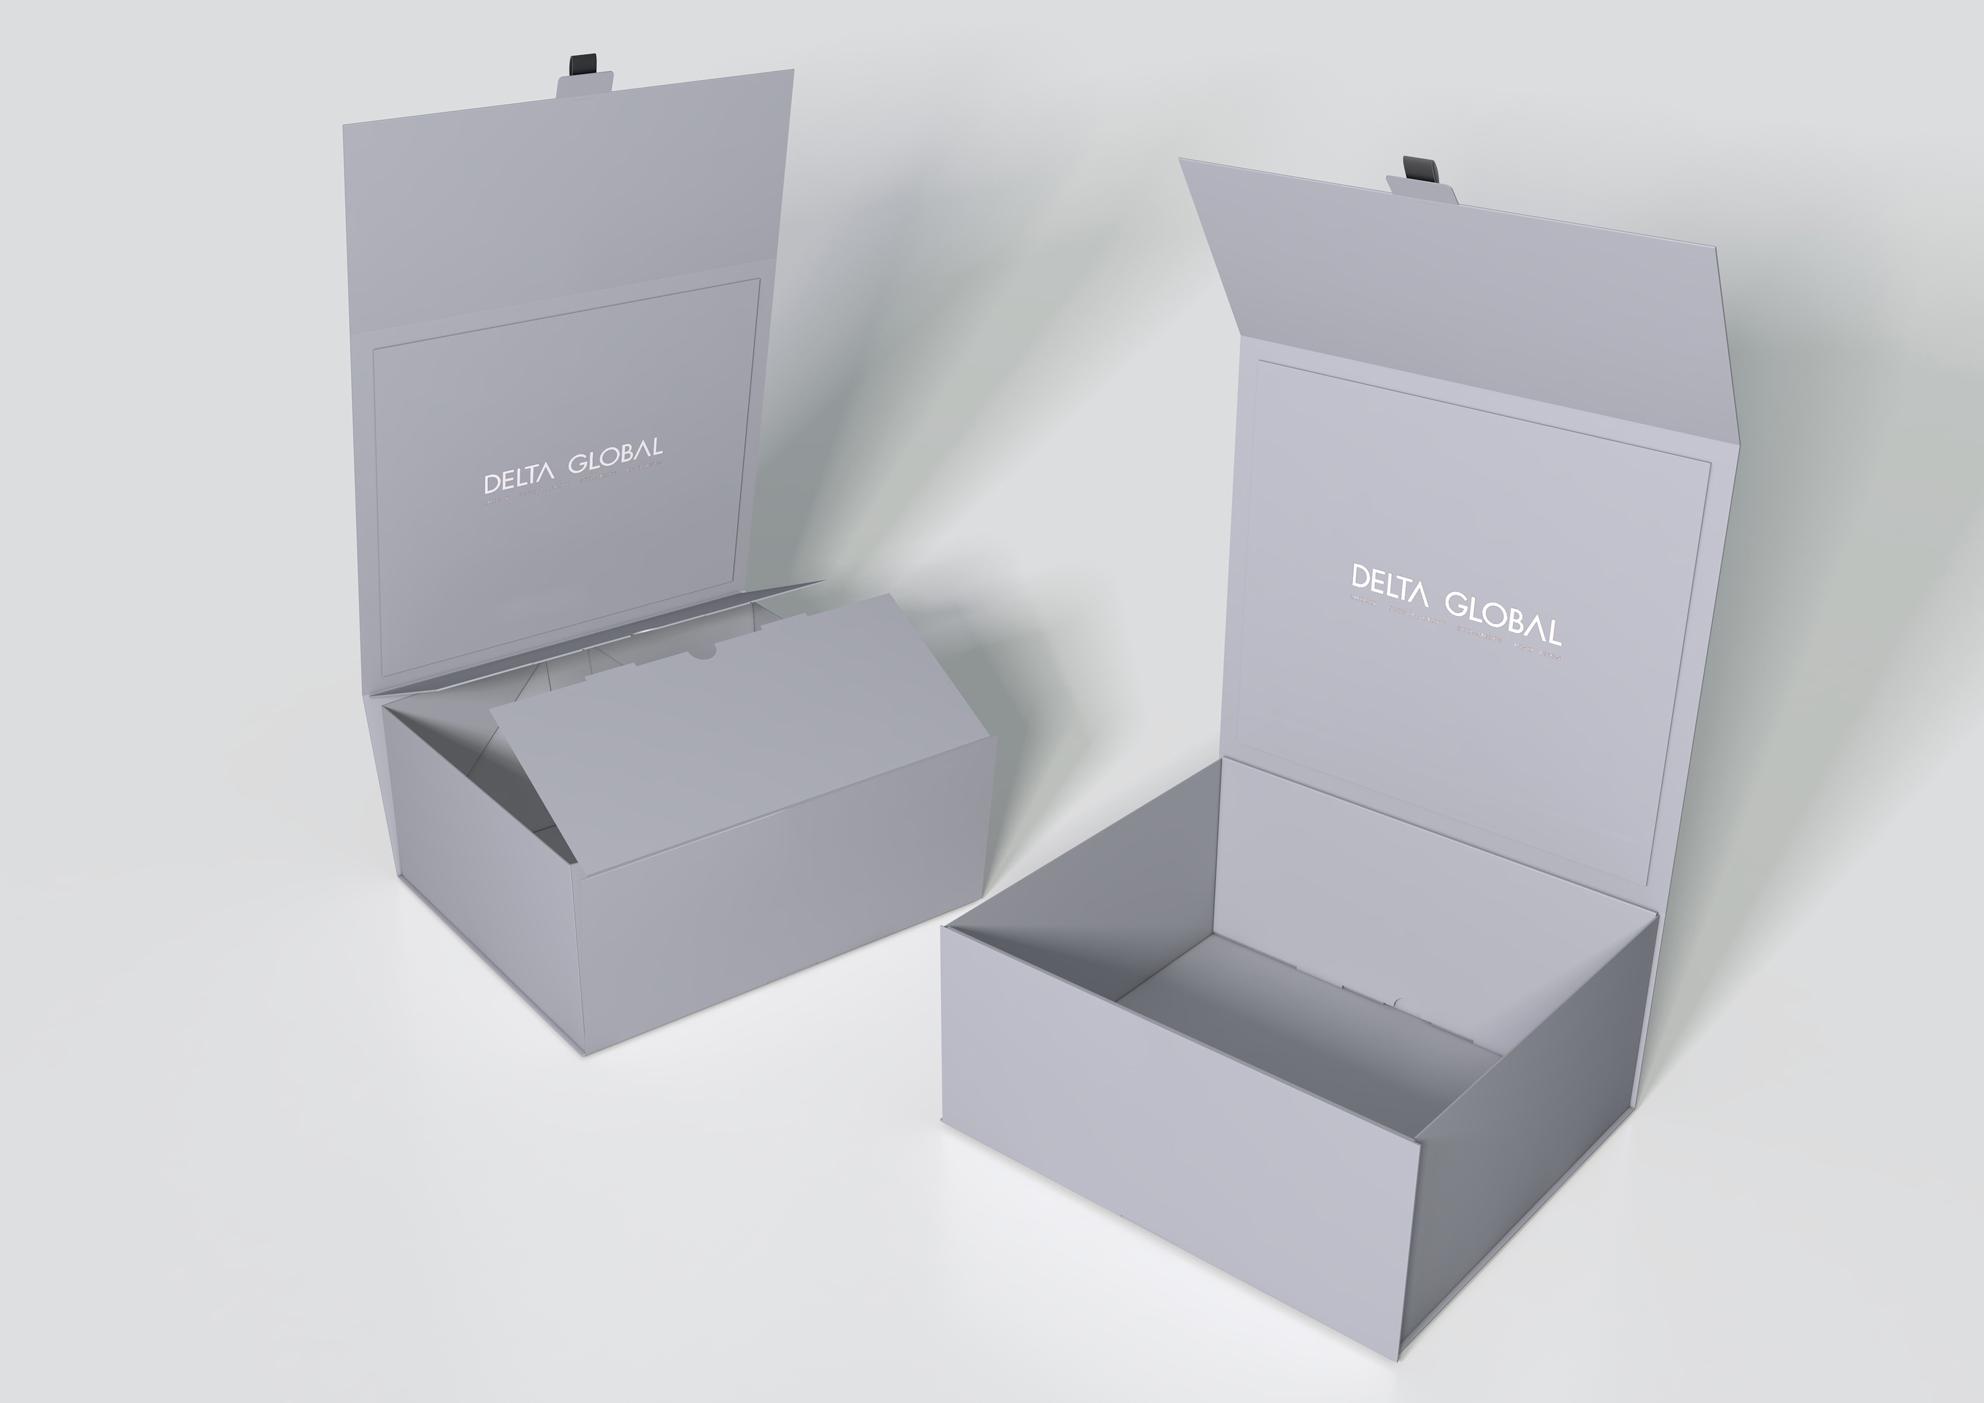 The Maverick Luxury Box Packaging